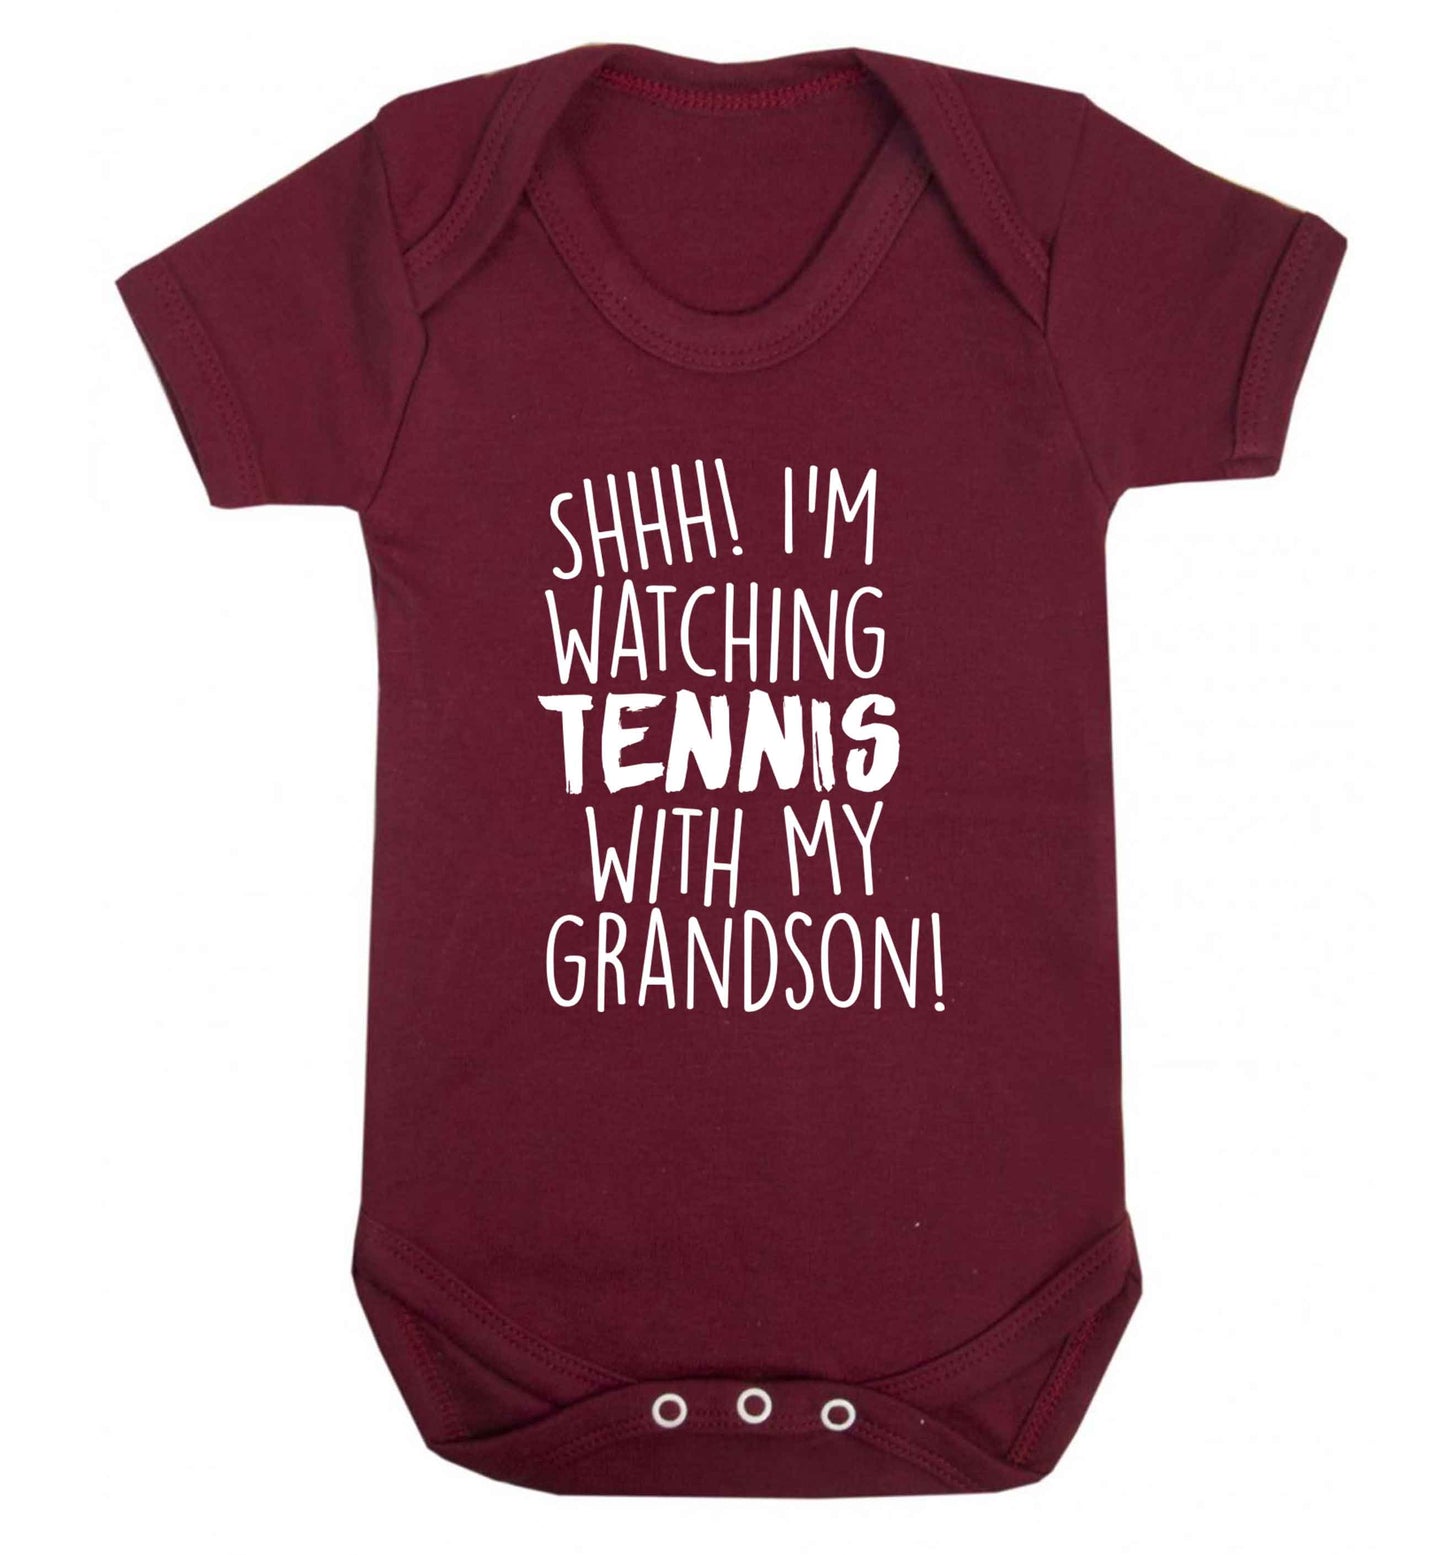 Shh! I'm watching tennis with my grandson! Baby Vest maroon 18-24 months